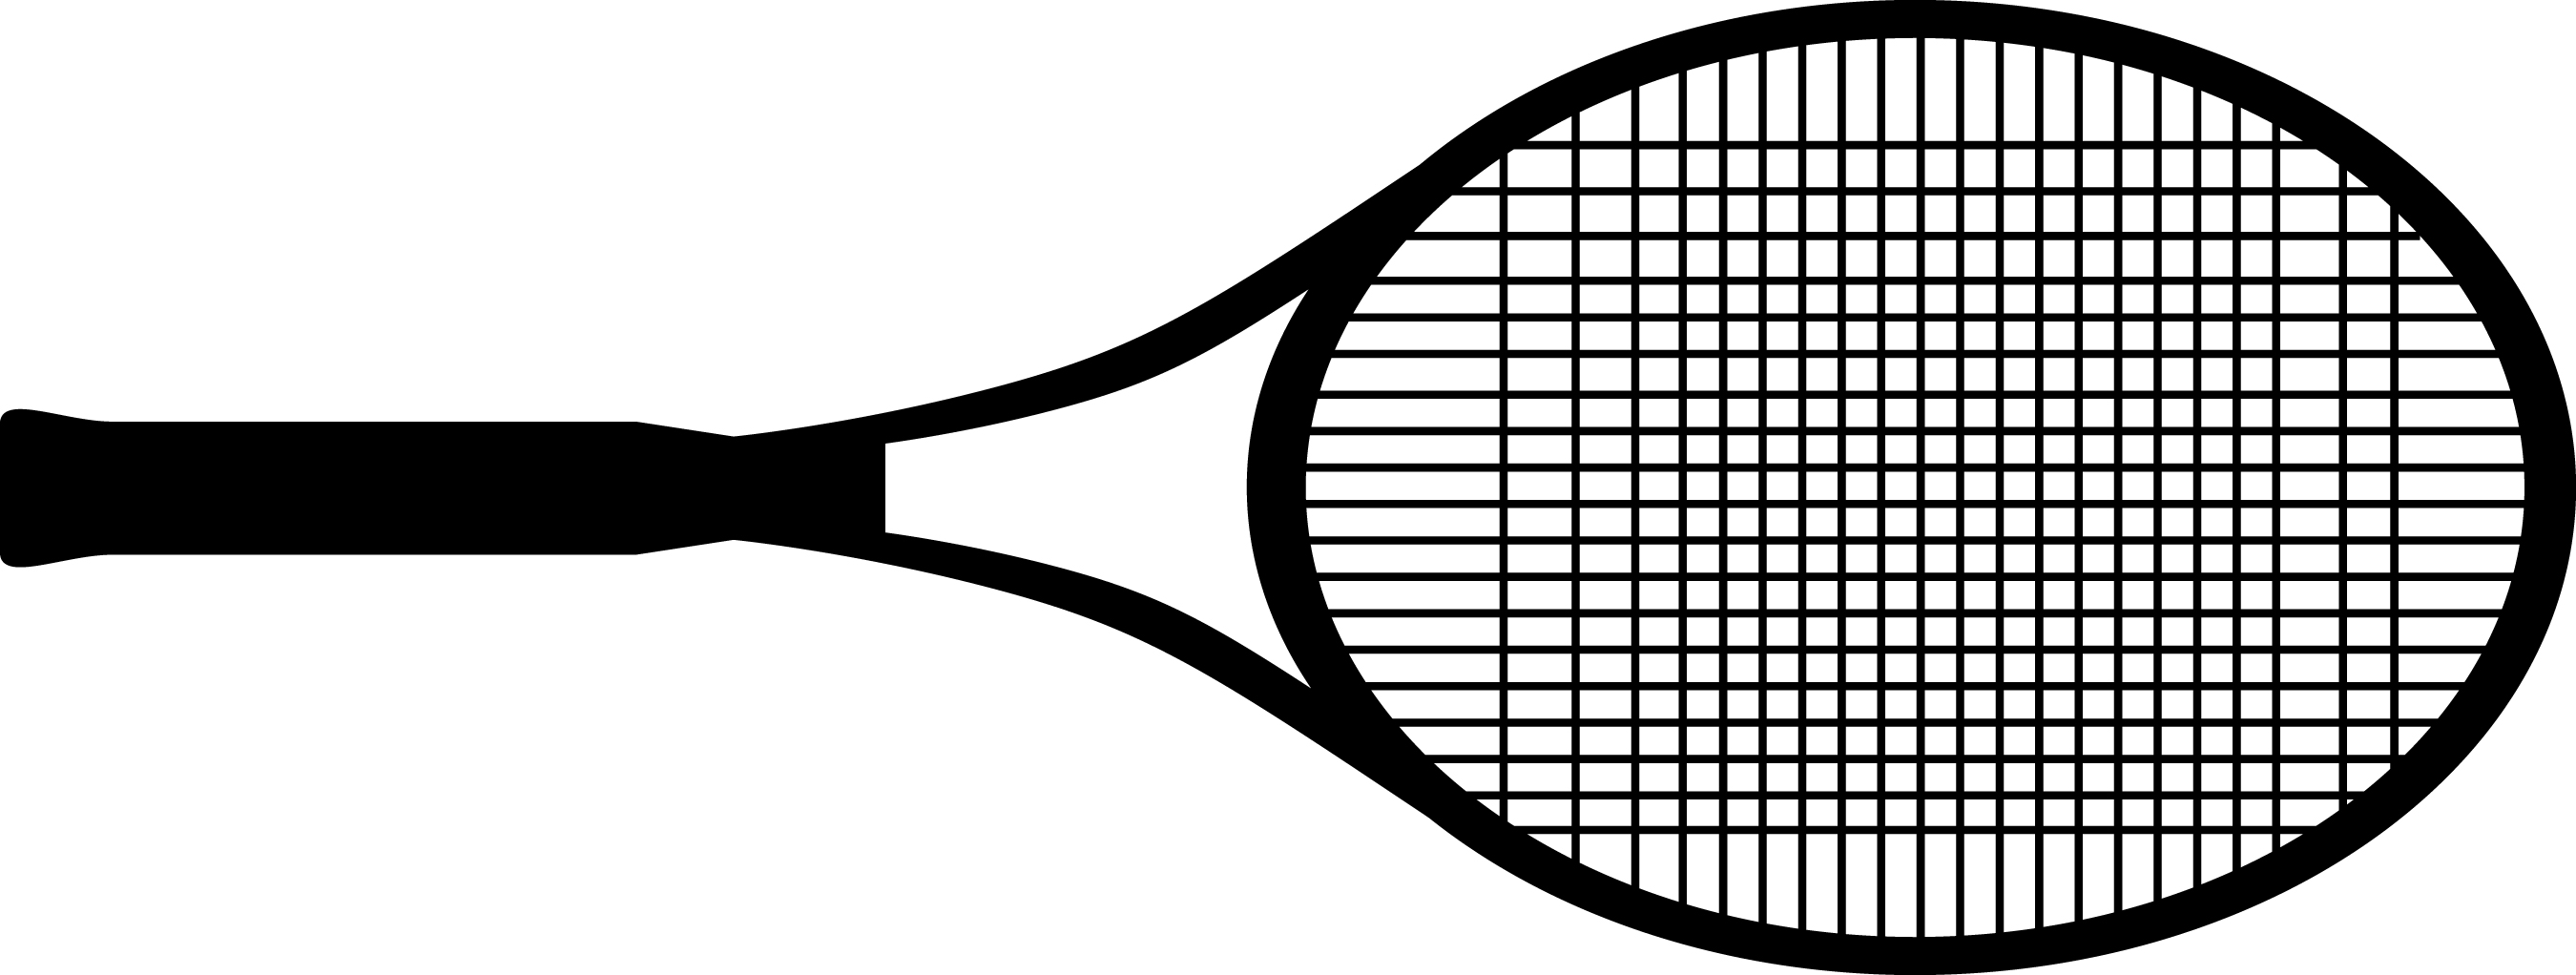 Tennis Racket Silhouette images  pictures - NearPics